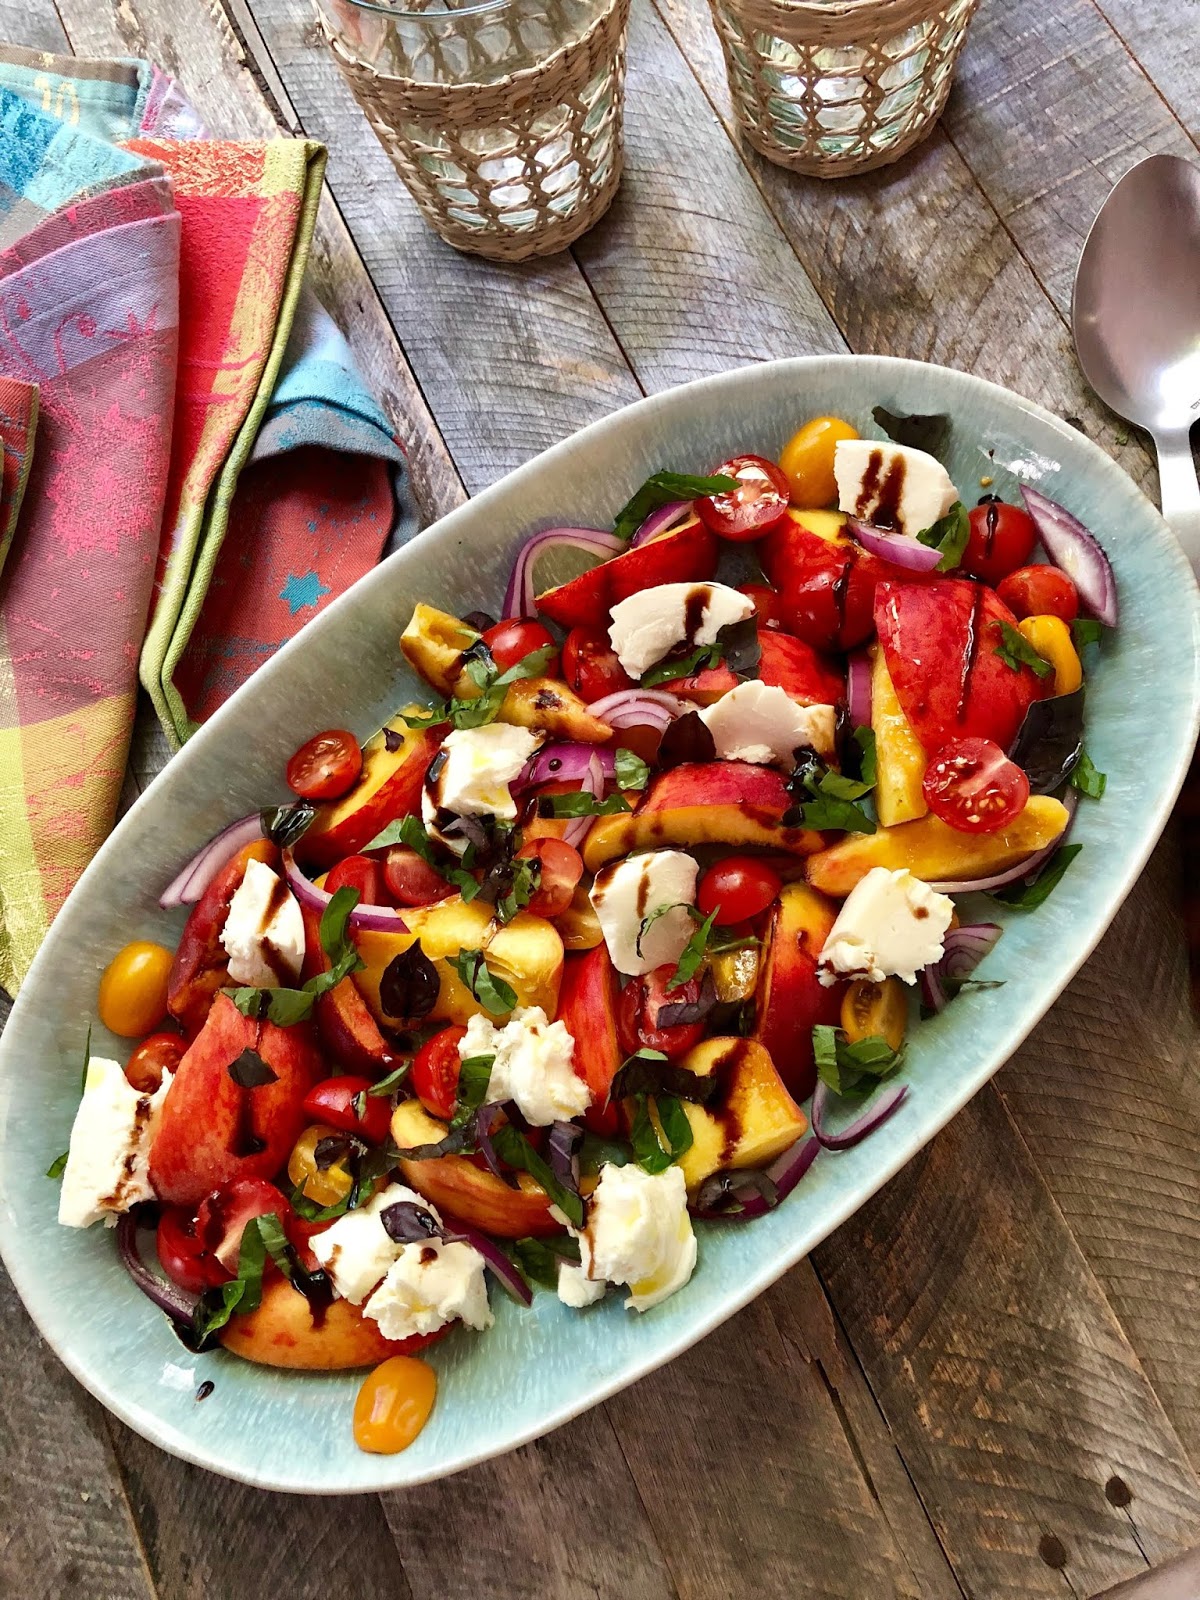 Best of Summer: Peach, Tomato & Mozzarella Salad